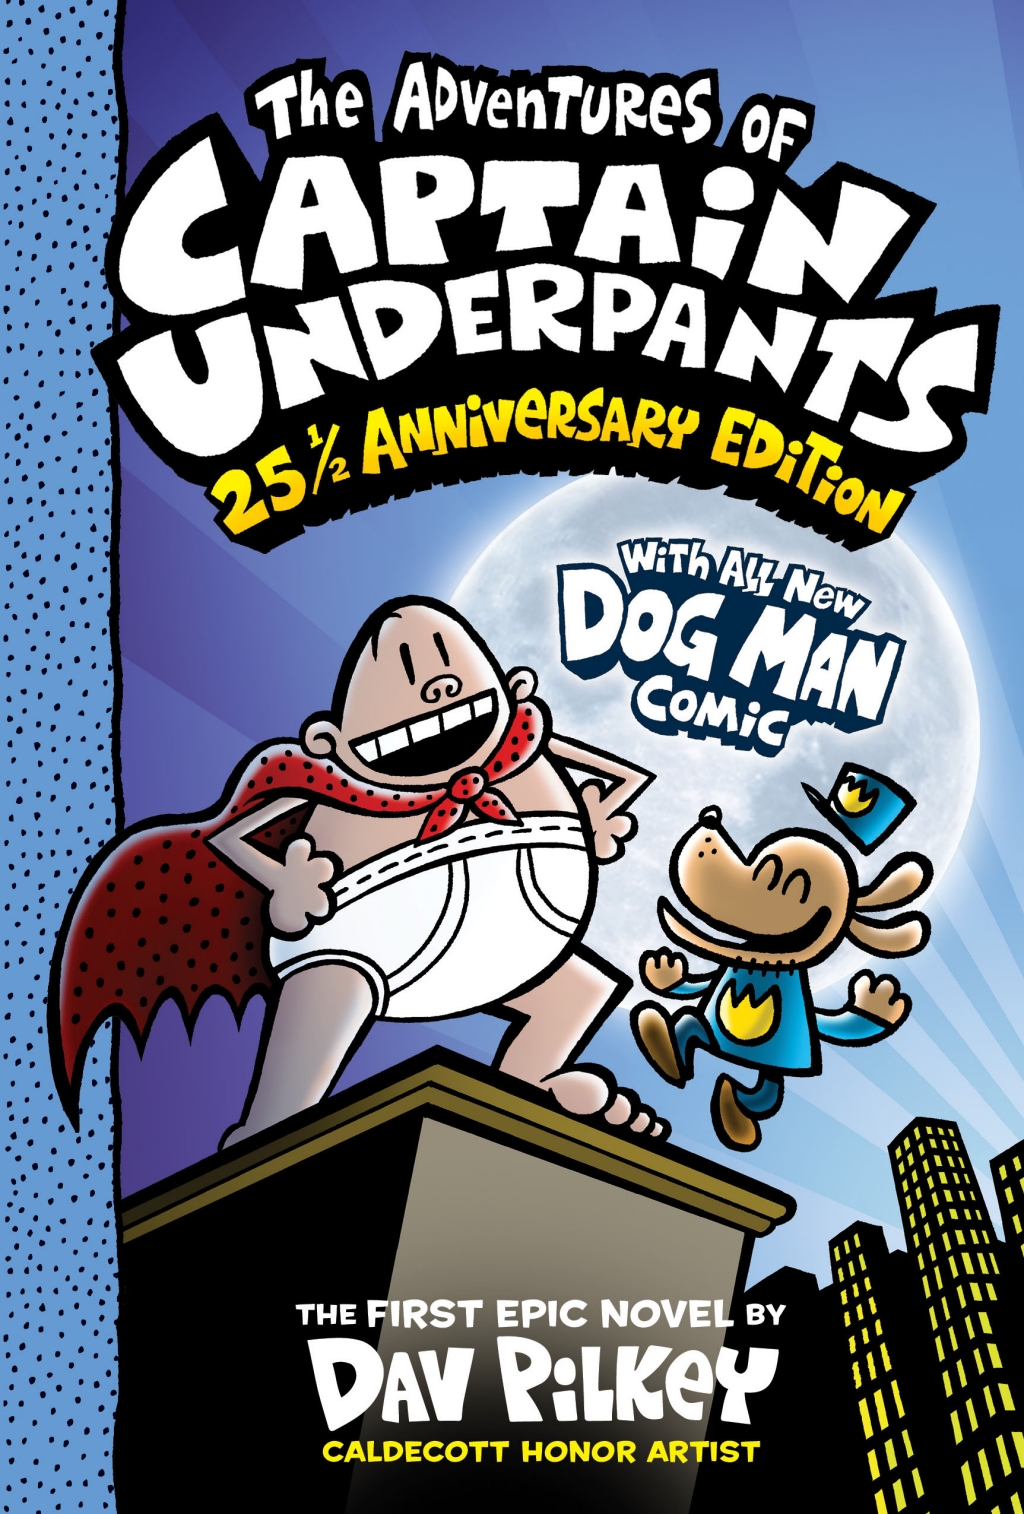 Captain Underpants Book Series, Dav Pilkey